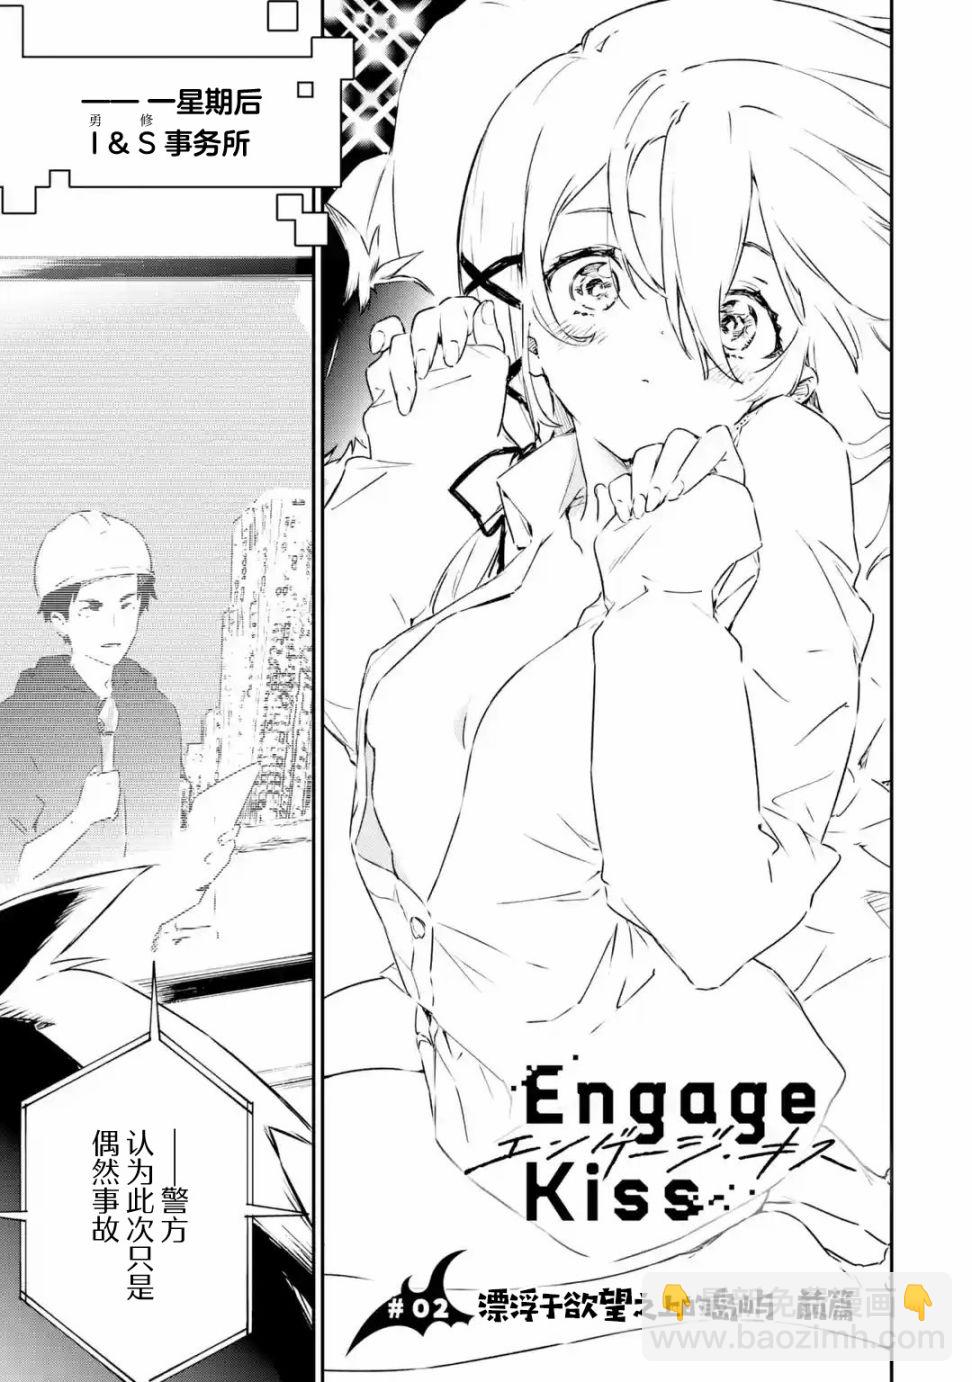 Engage Kiss - 第2.1話 - 3